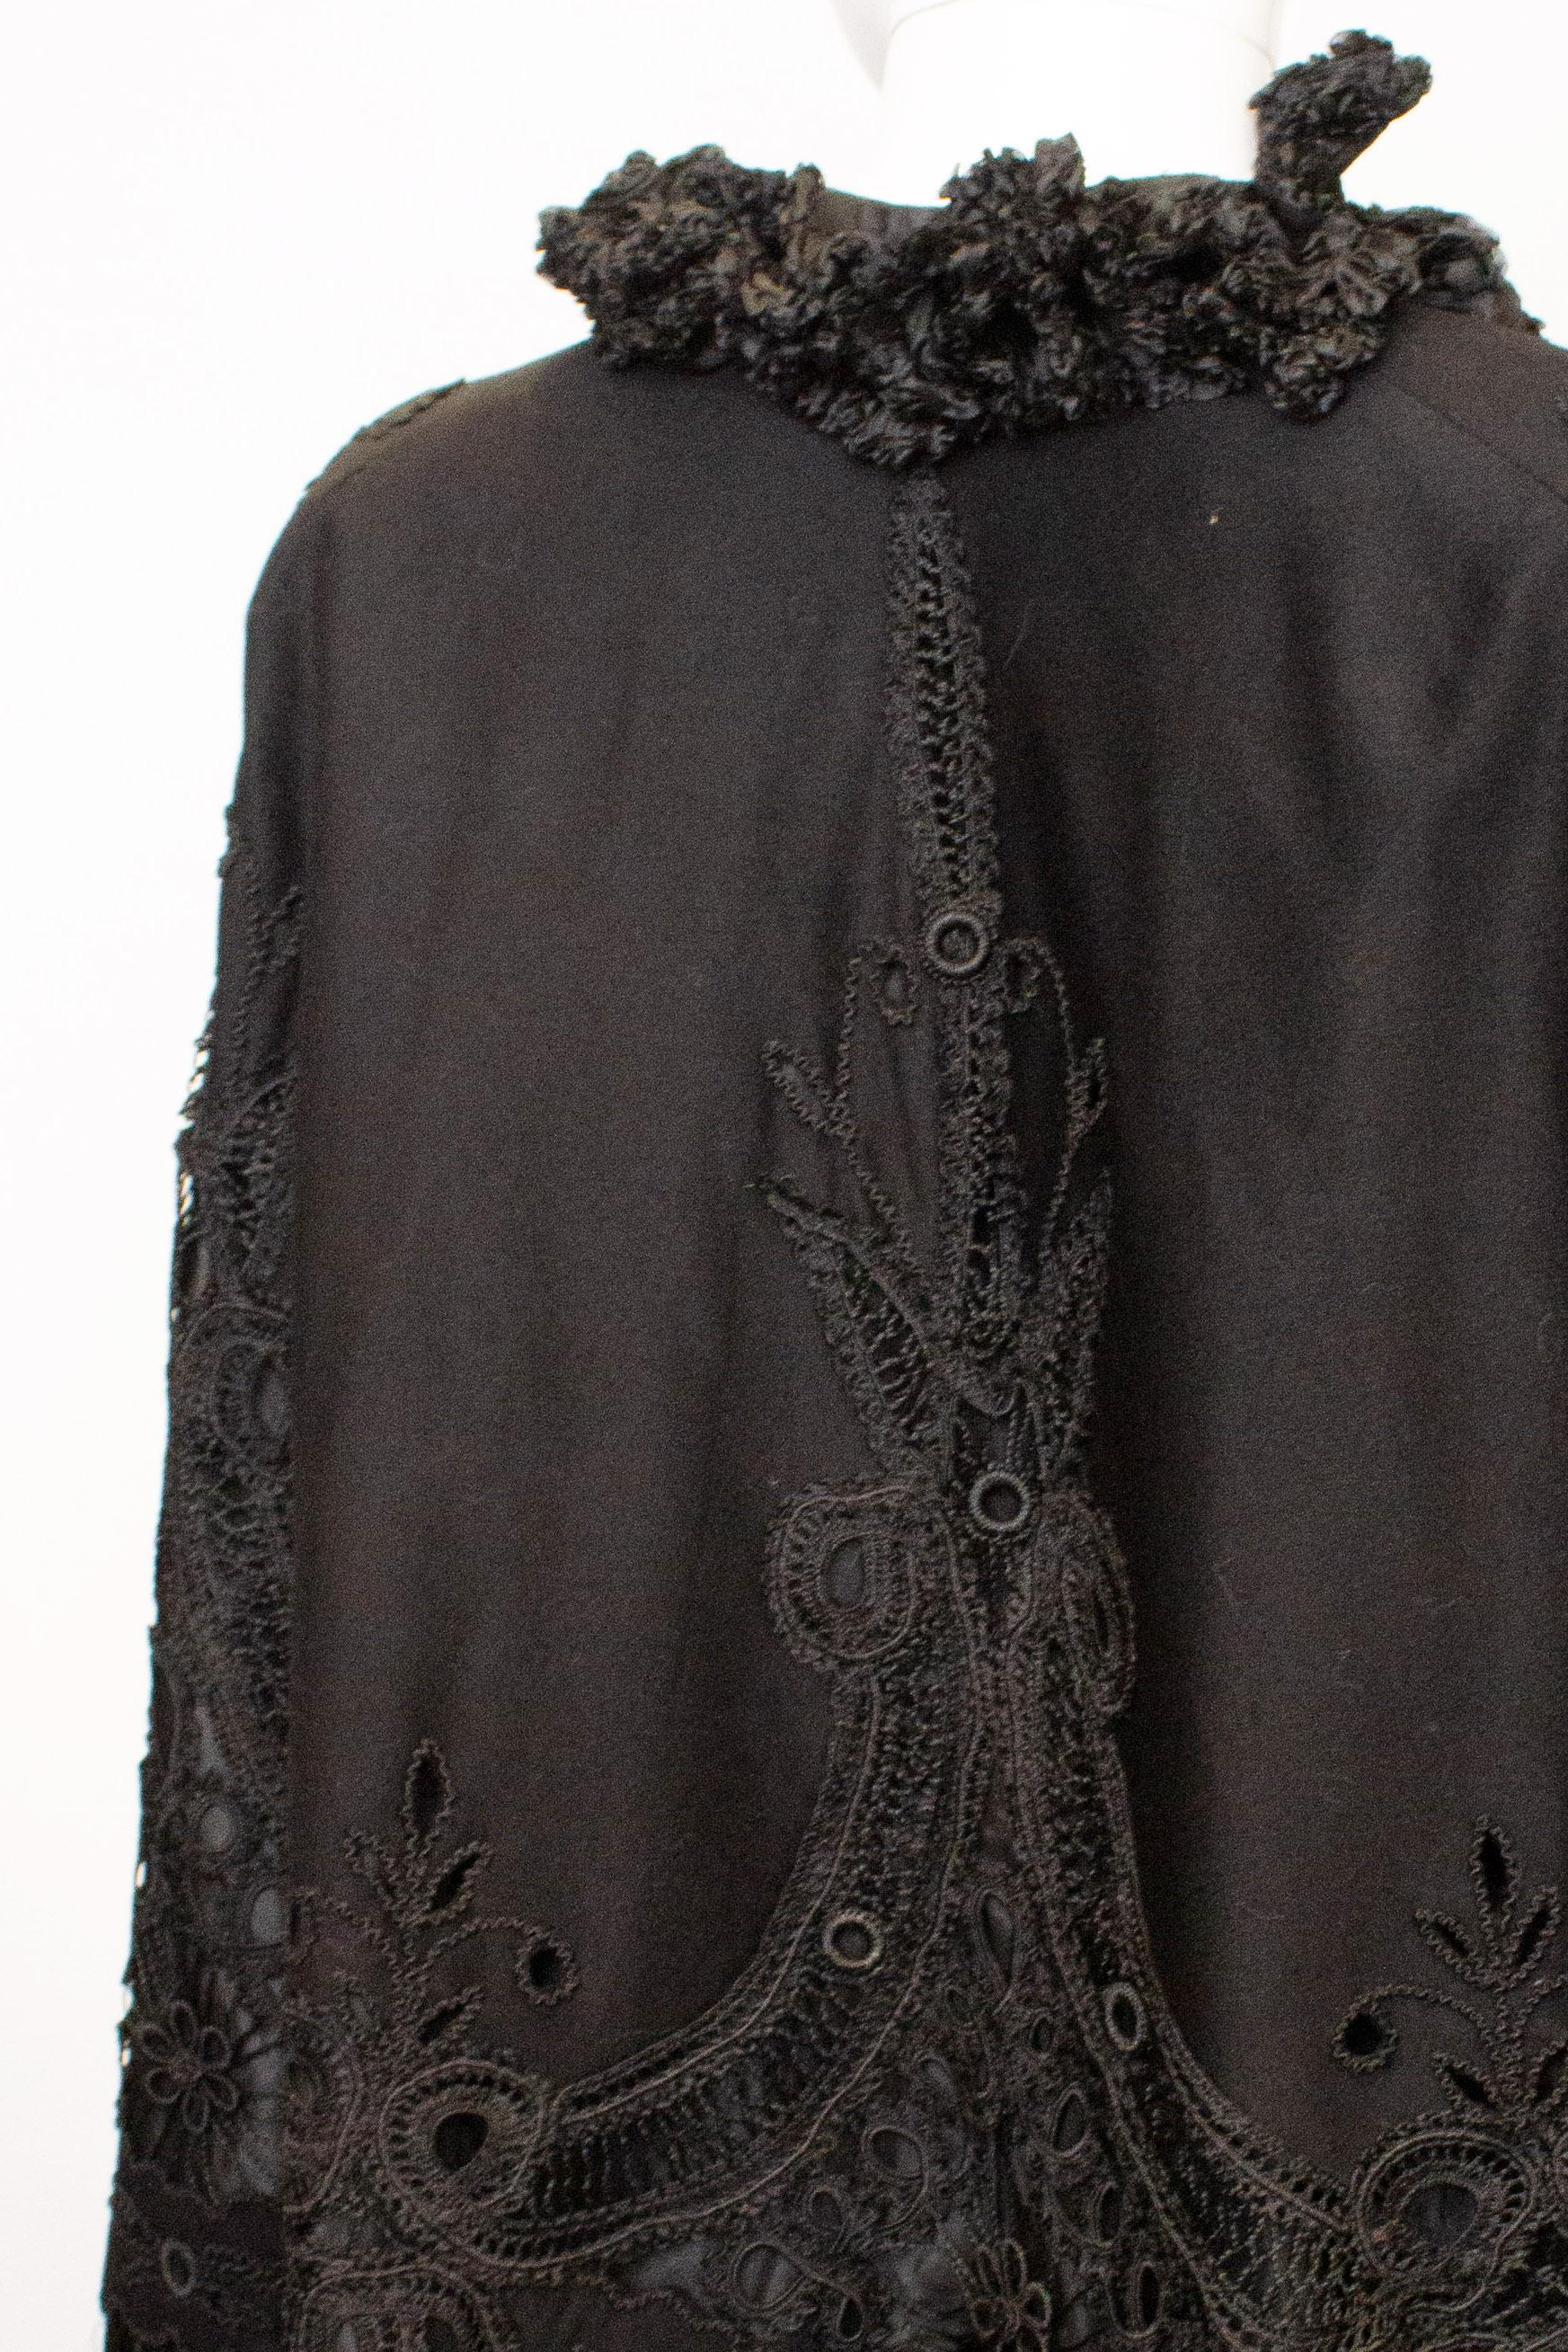 Vintage Black Felt Cape with Embroidery Detail. 2